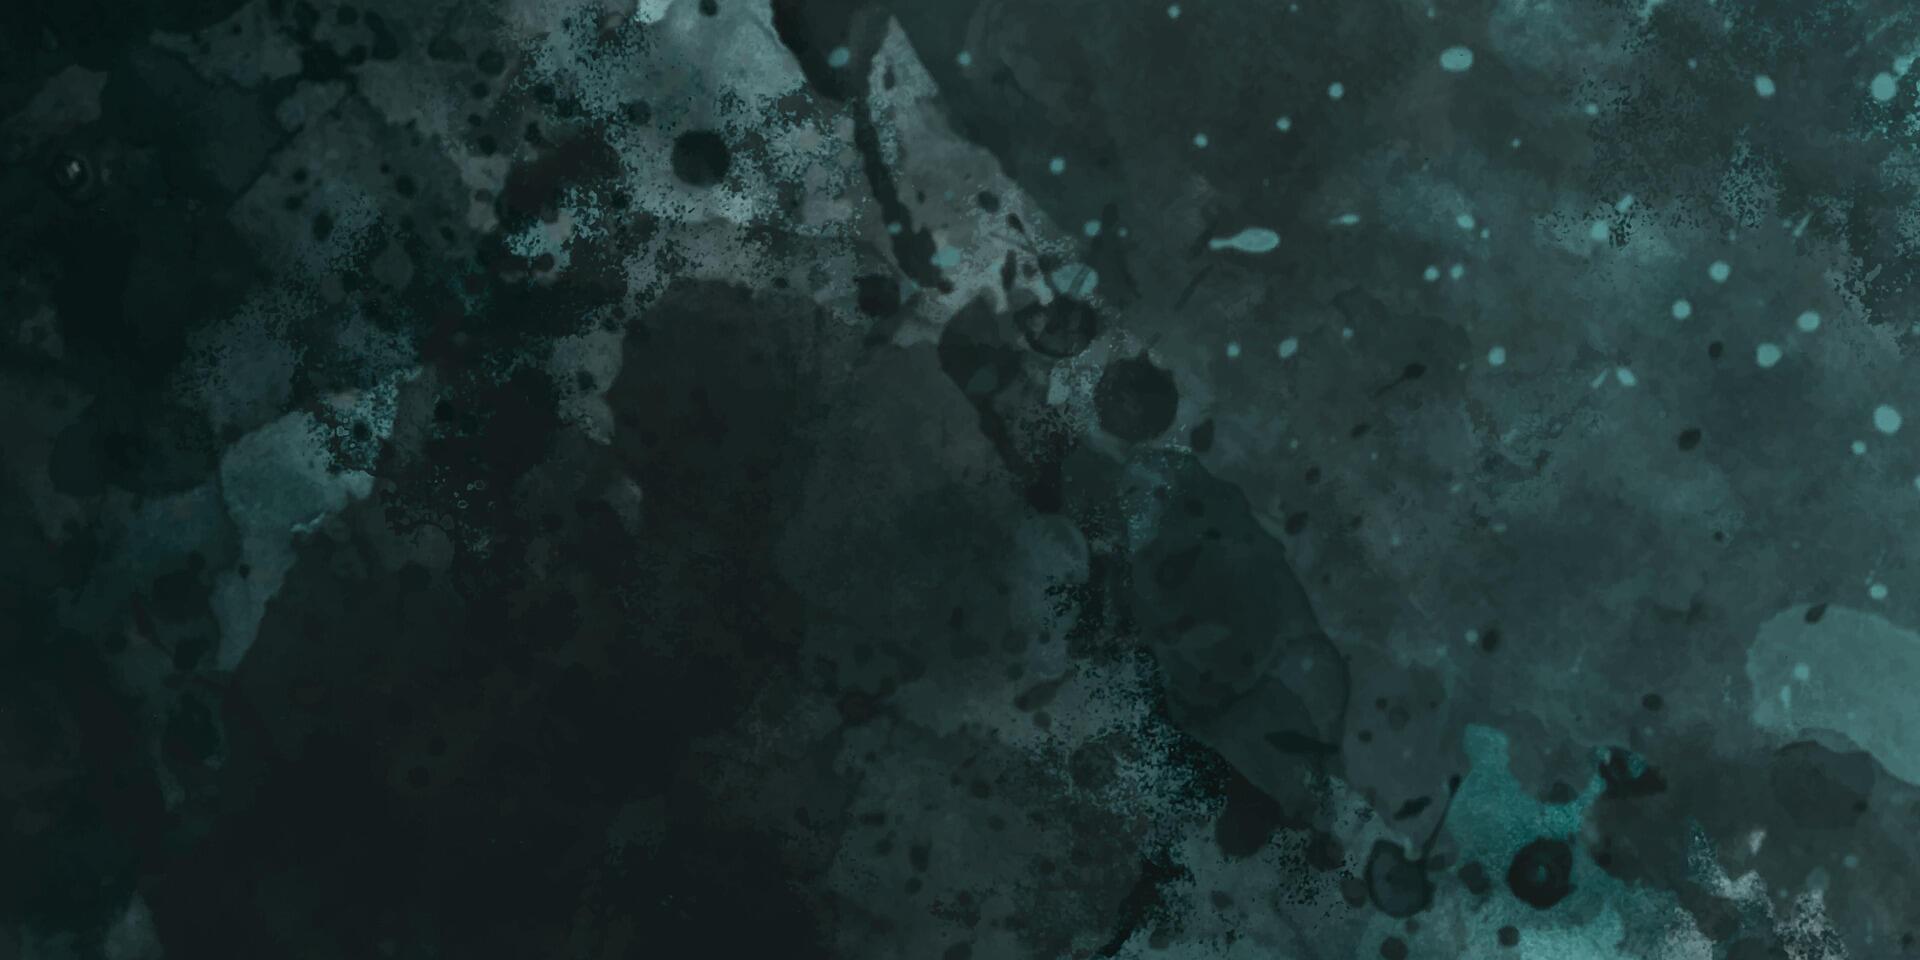 abstract waterverf achtergrond textuur. blauw en zwart achtergrond textuur. donker plons achtergrond. vector